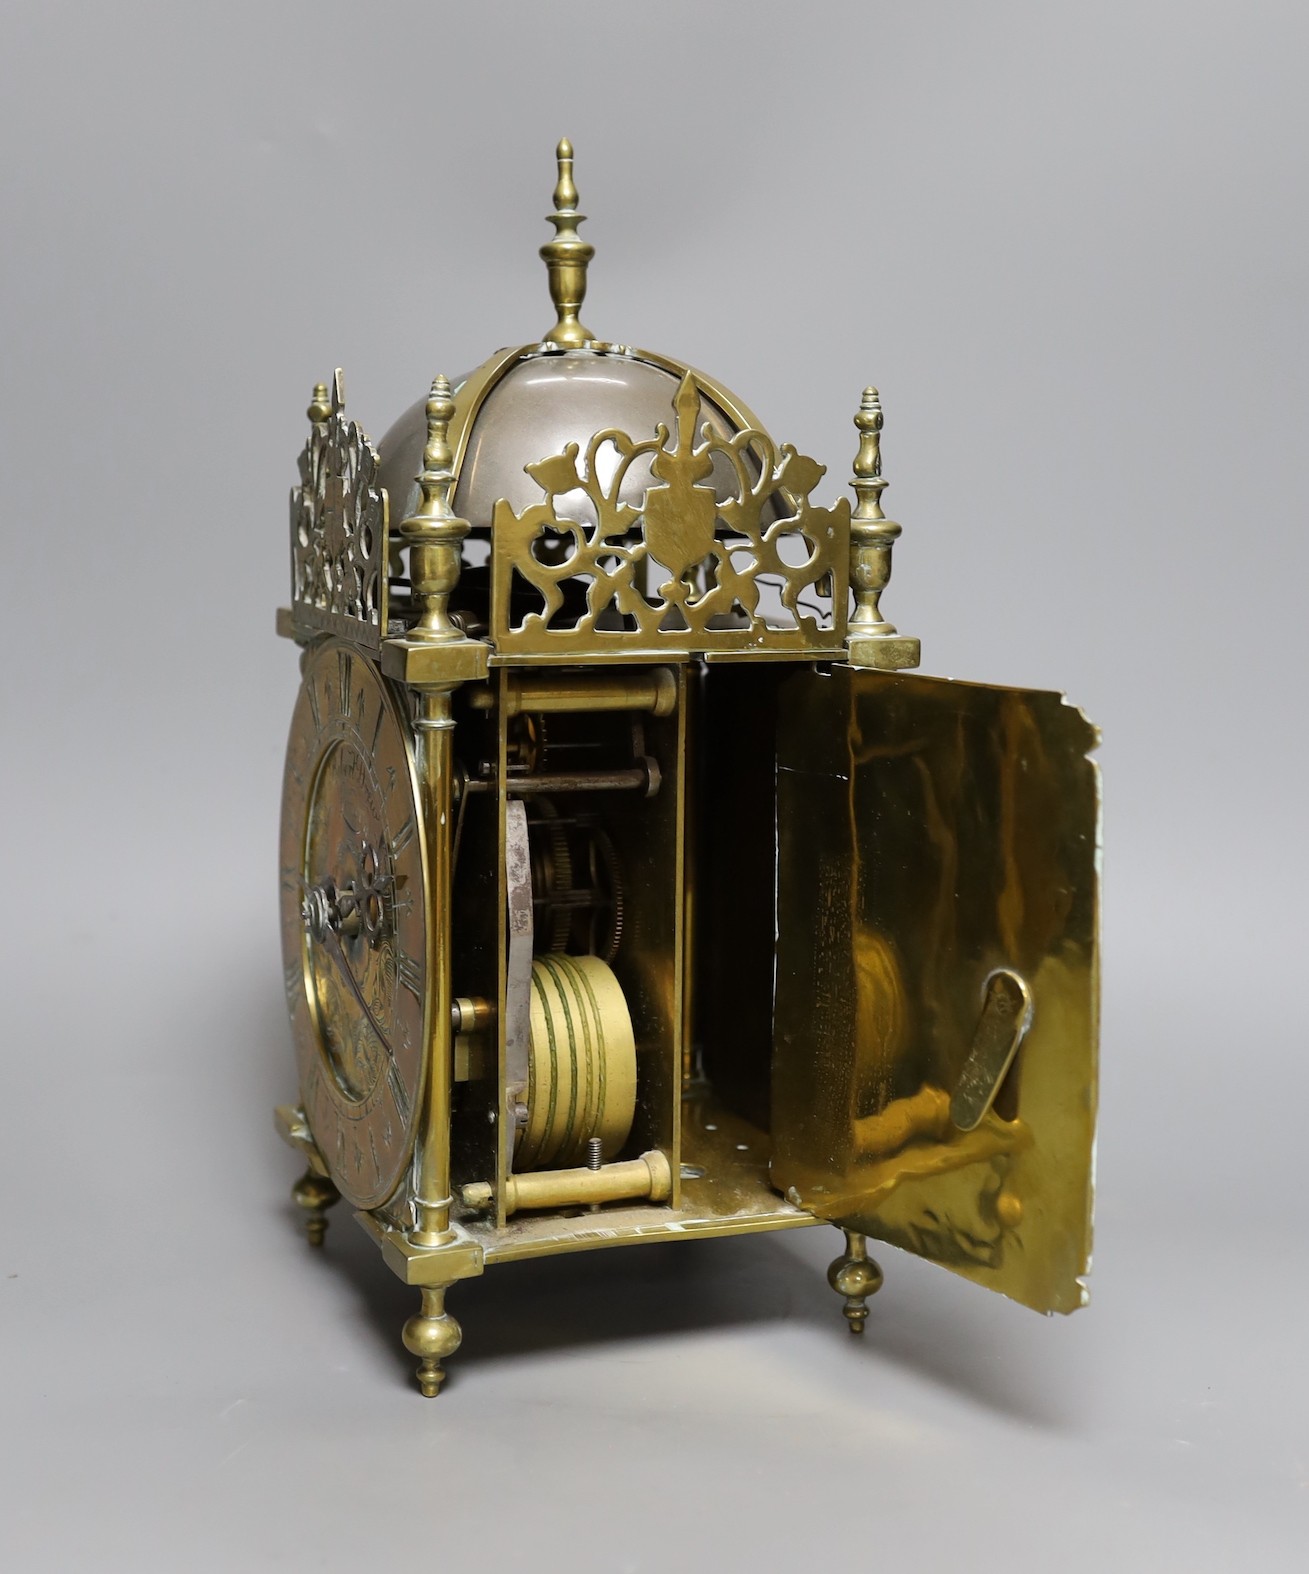 A brass lantern clock, signed Robert Drew, London, single fusee movement, 34 cms high